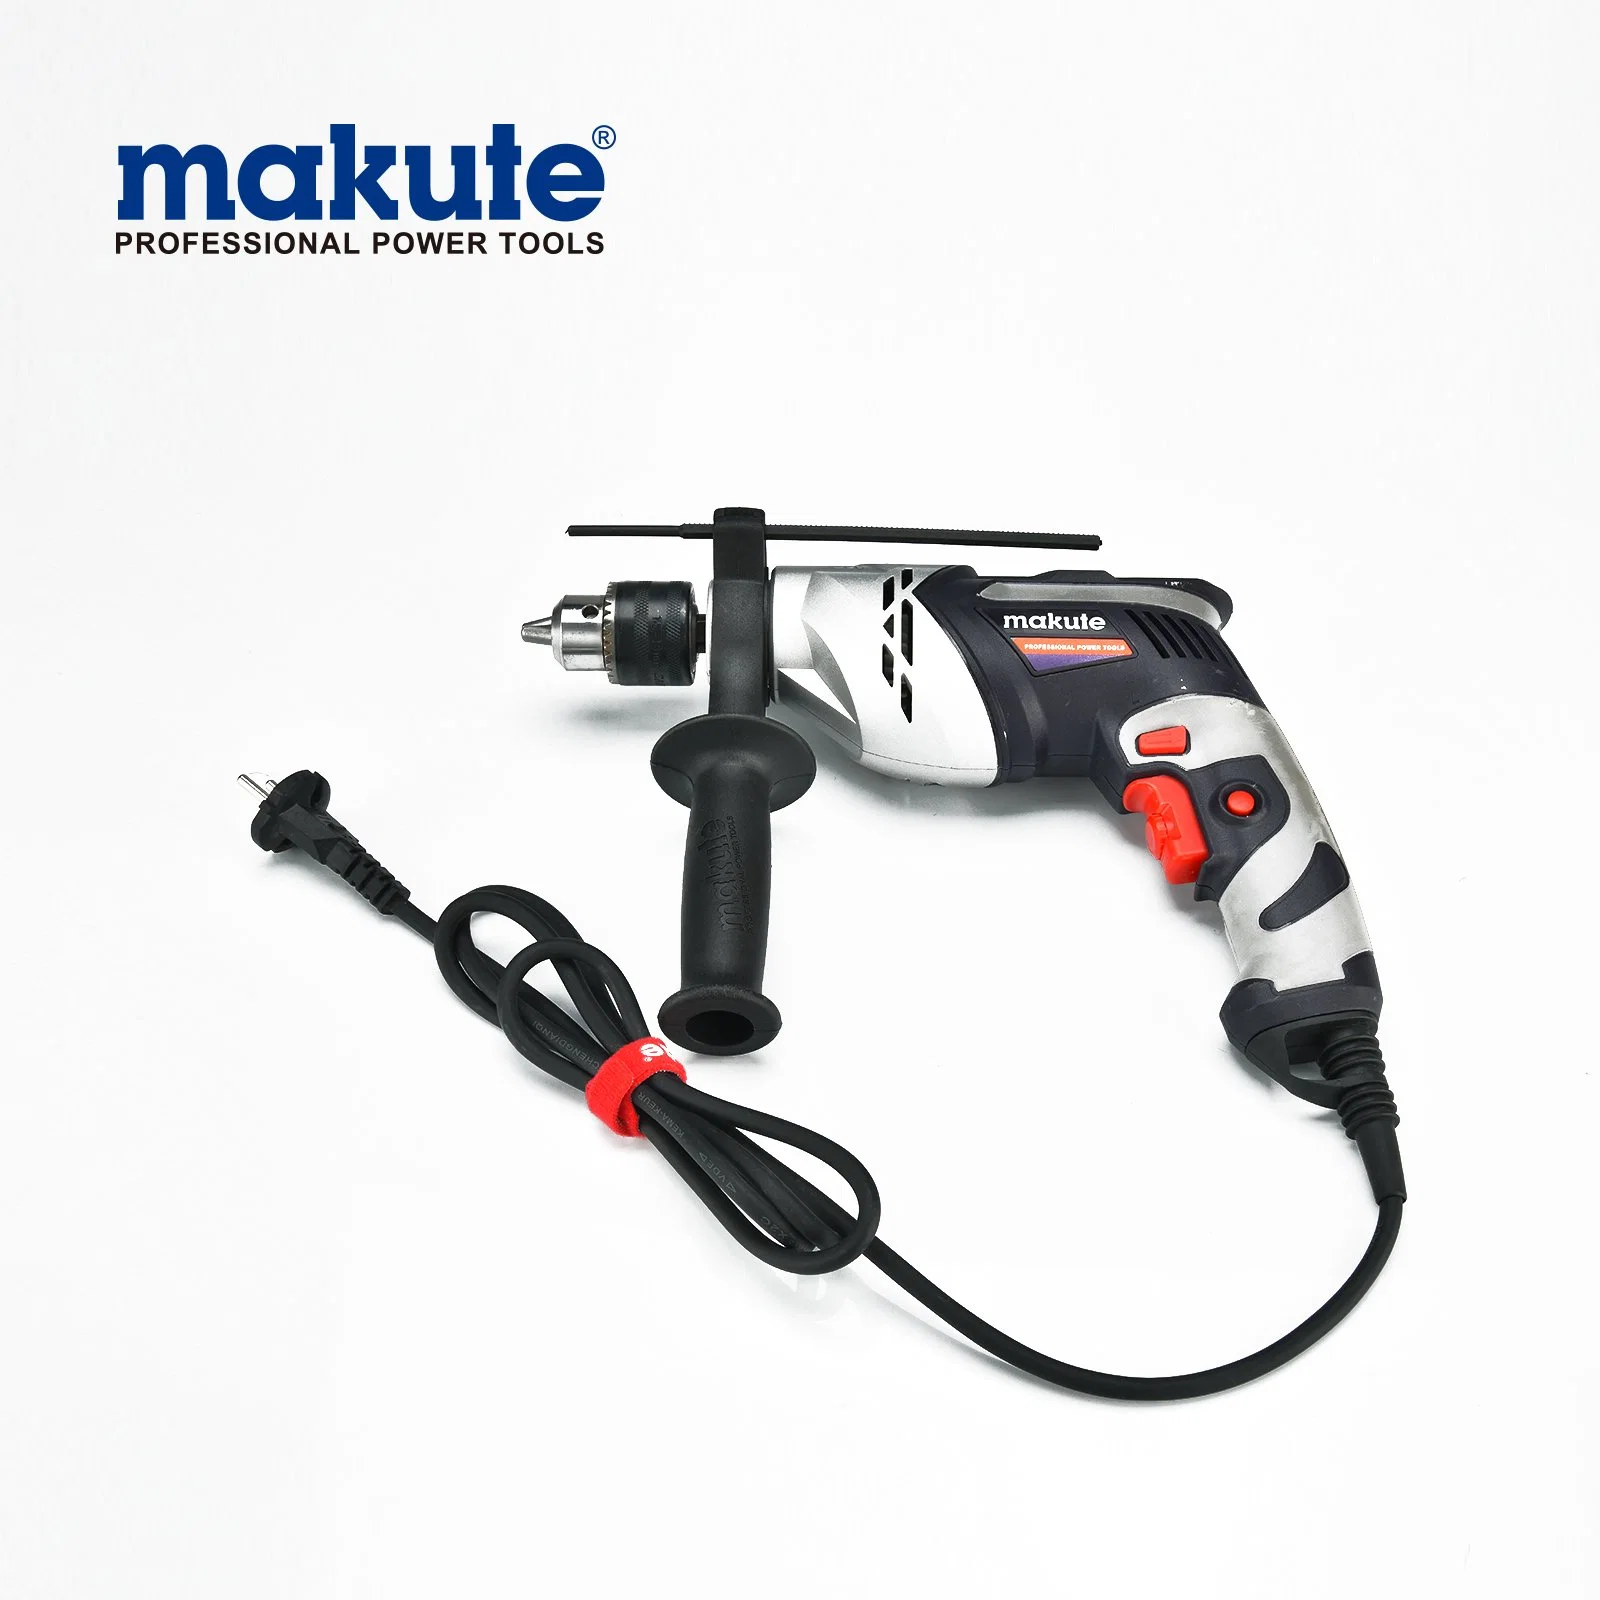 1020W Makute ID009 Impact Drill Hammer Drill Power Tool